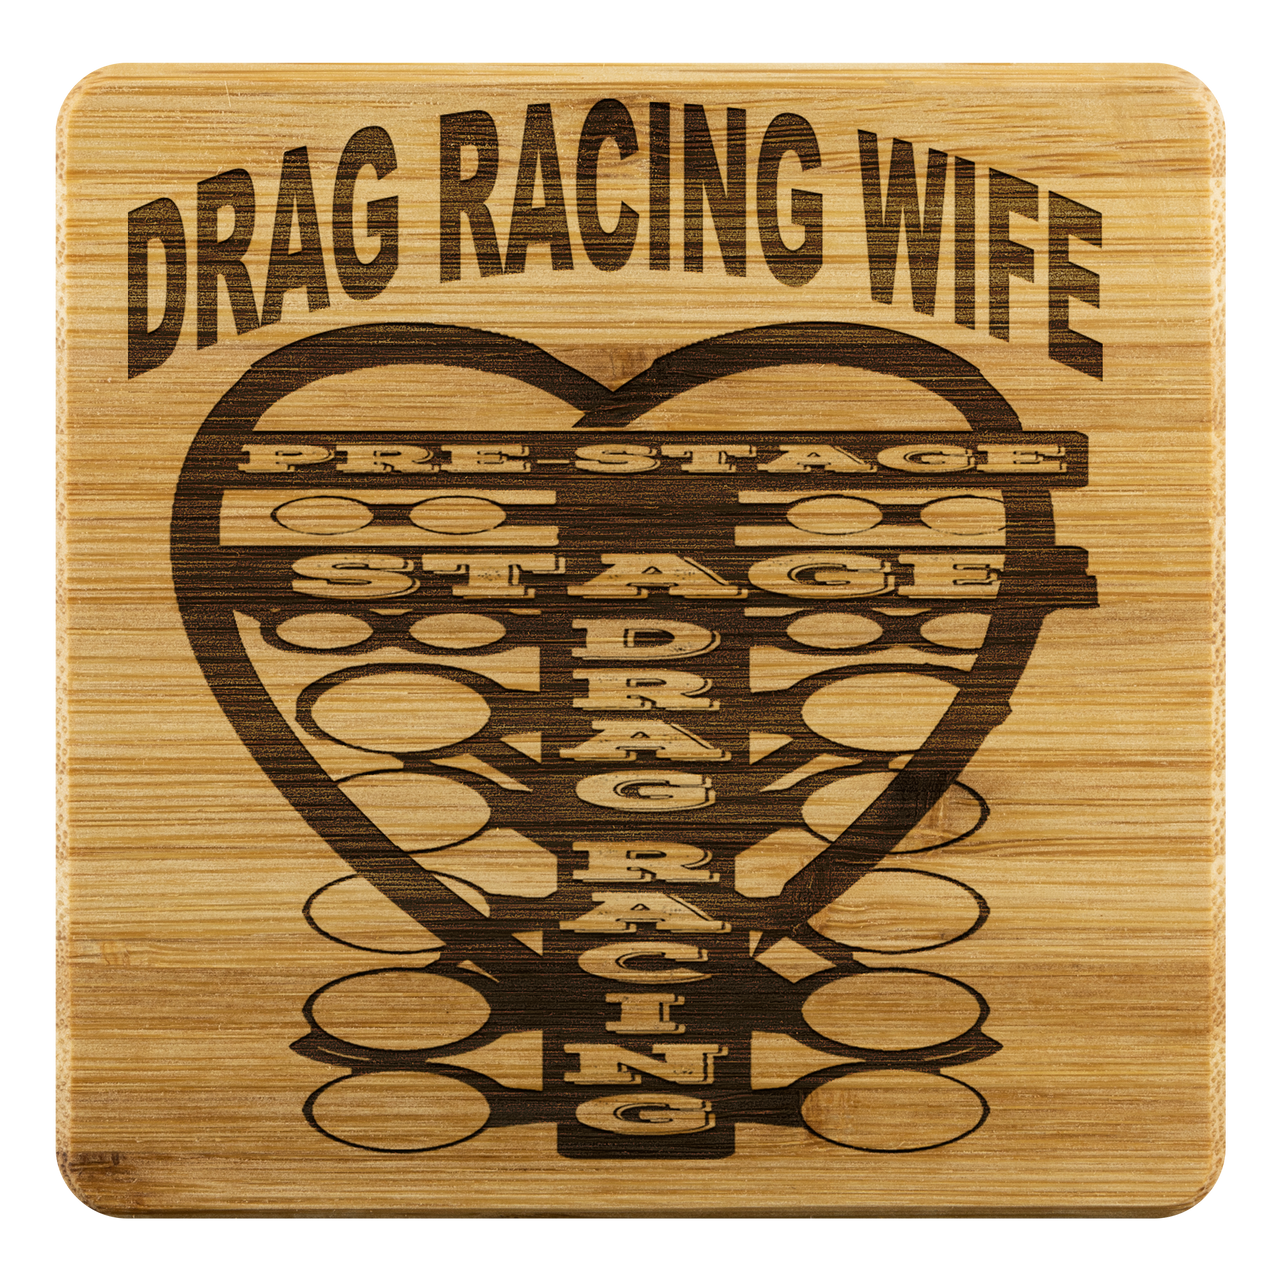 Drag Racing Wife Bamboo Coaster